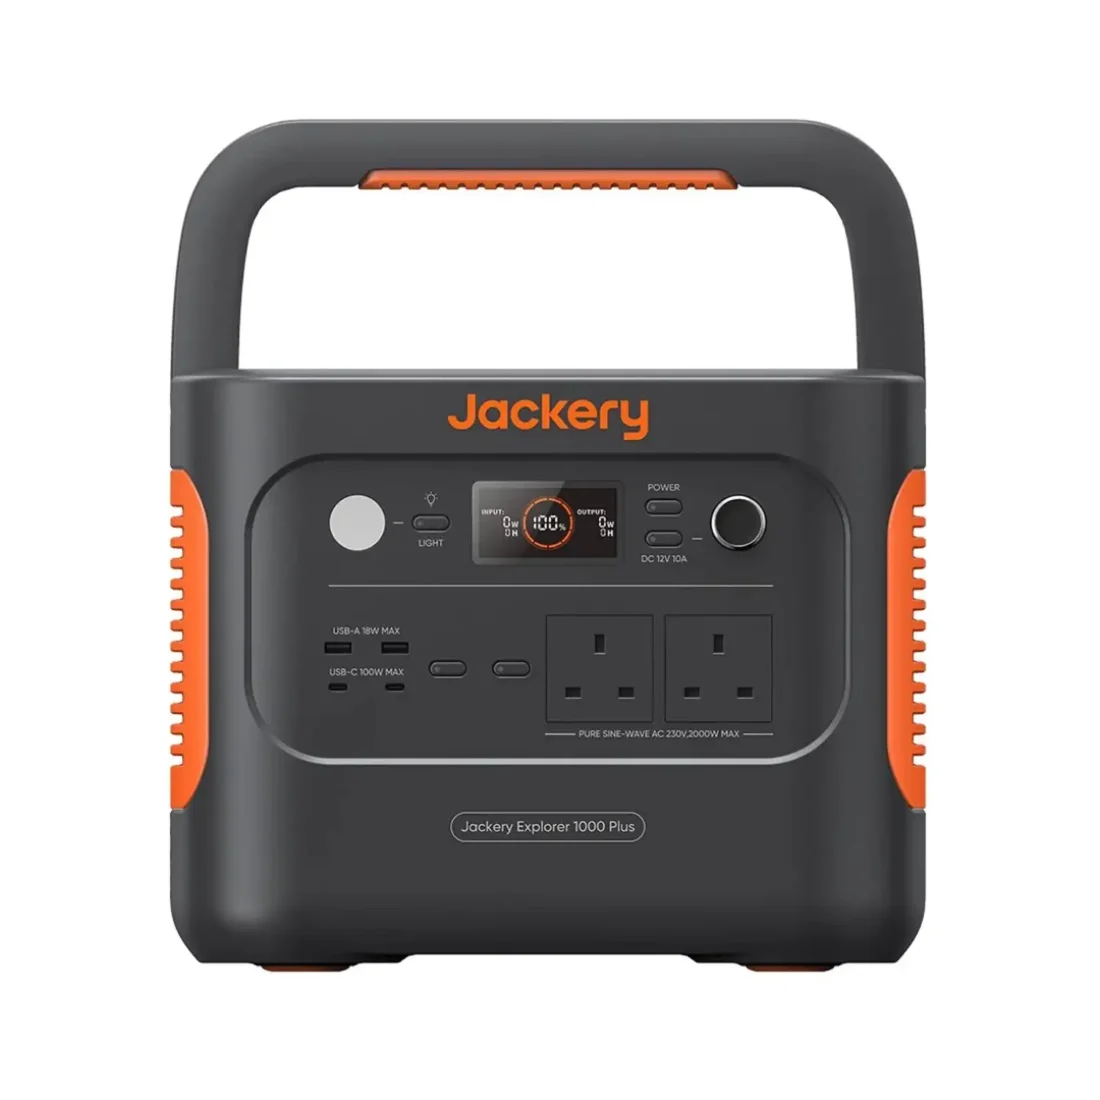 Jackery Explorer 1000 Plus Portable Power Station